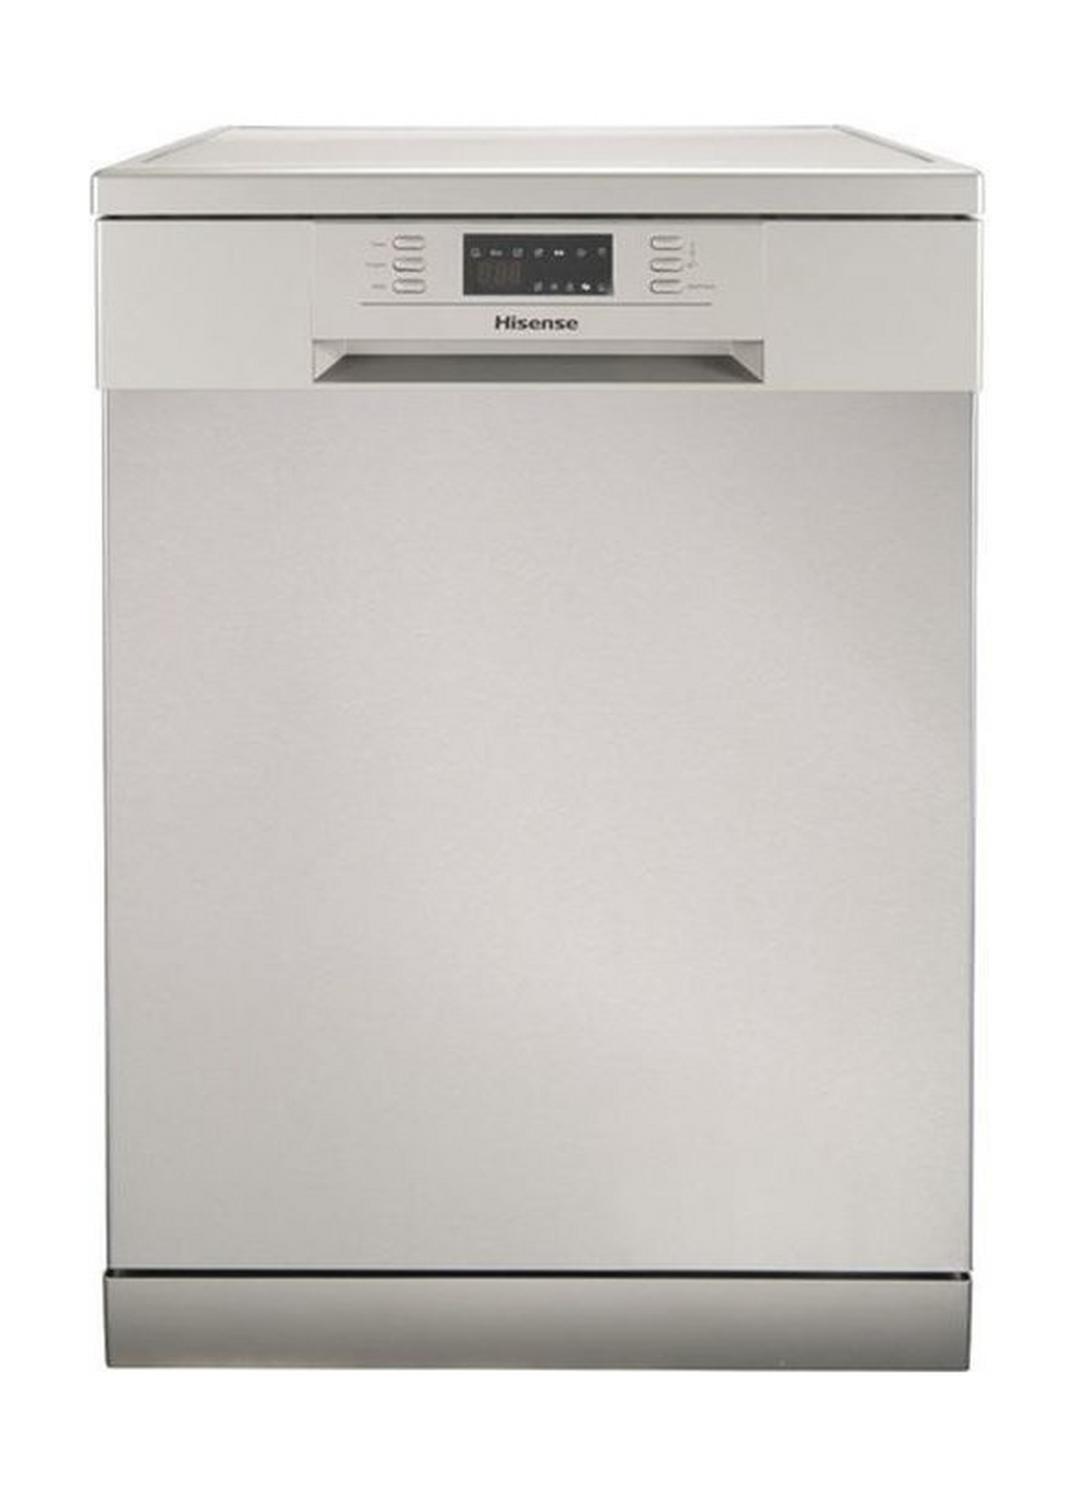 Hisense H14DS 6 Program Free-standing Dishwasher - Silver